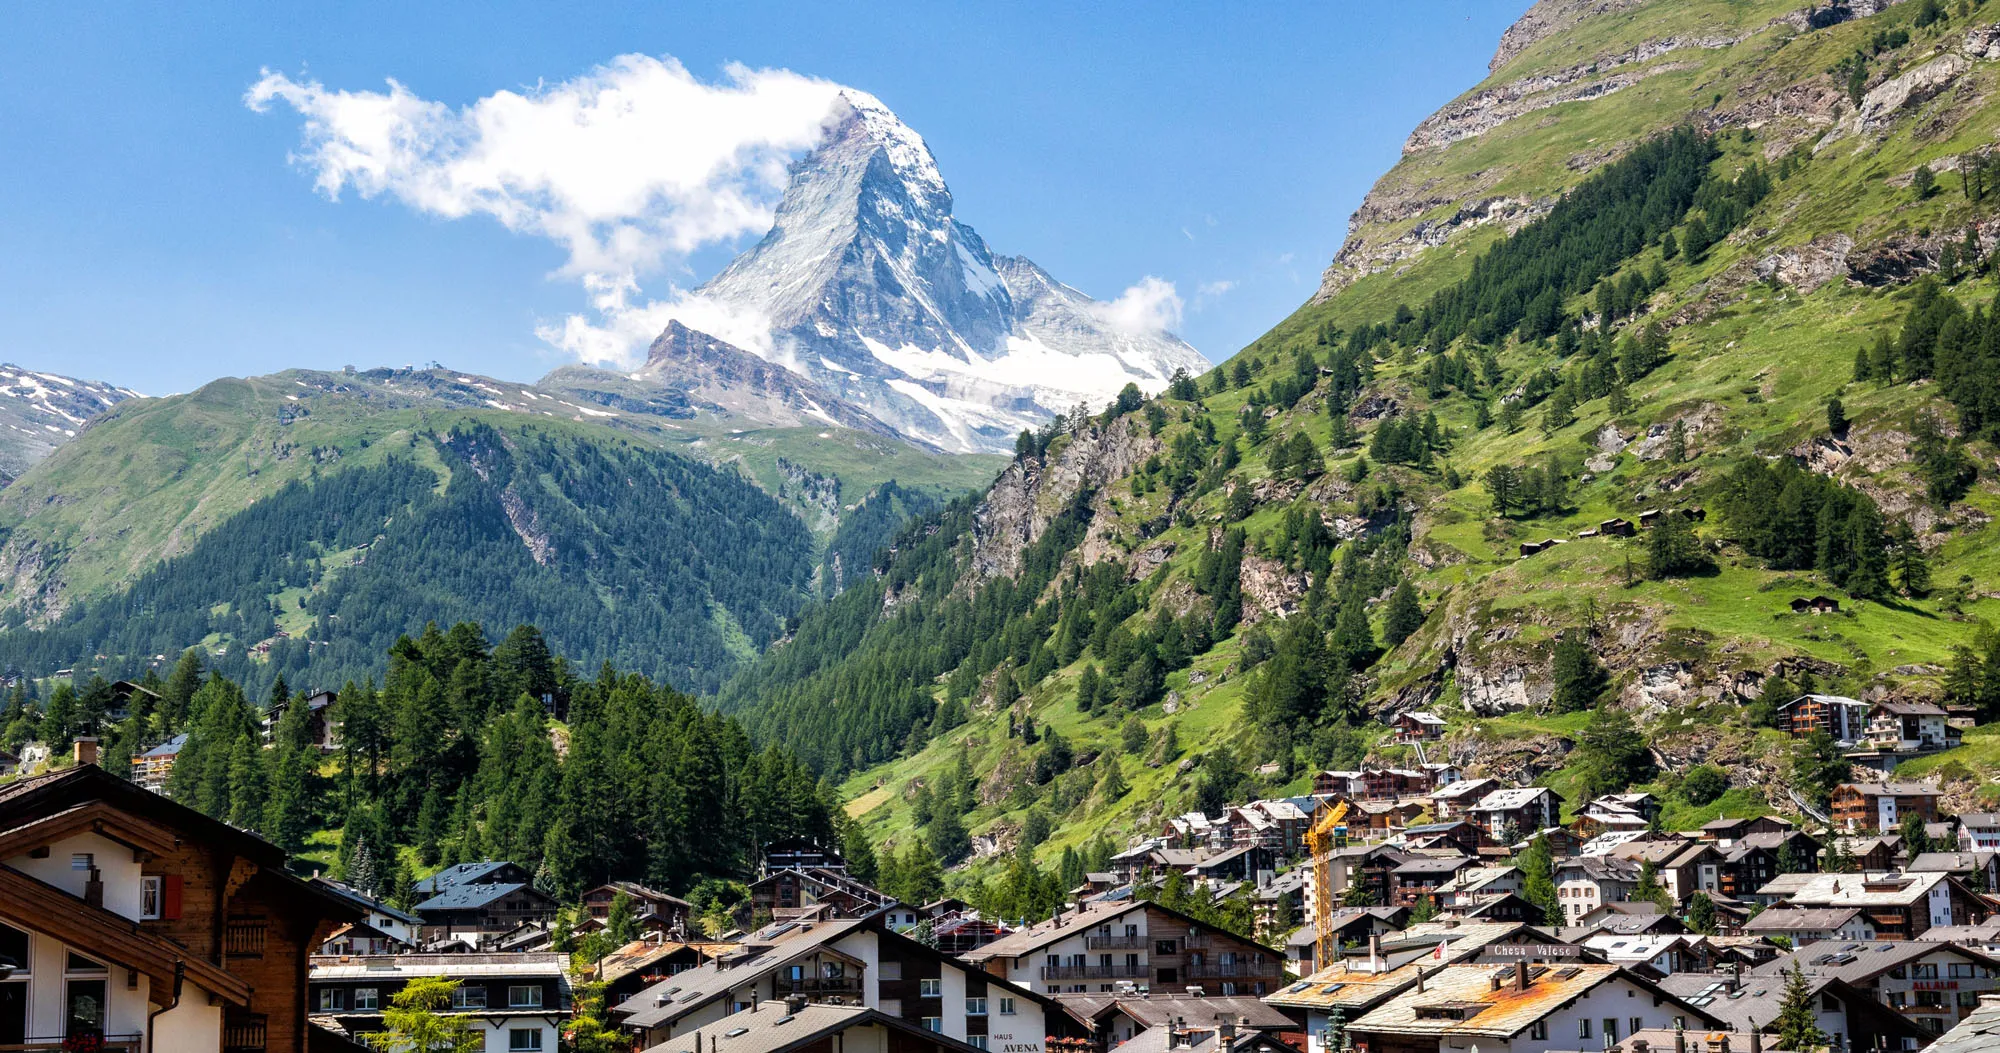 Featured image for “20 Amazing Things to Do in Zermatt, Switzerland”